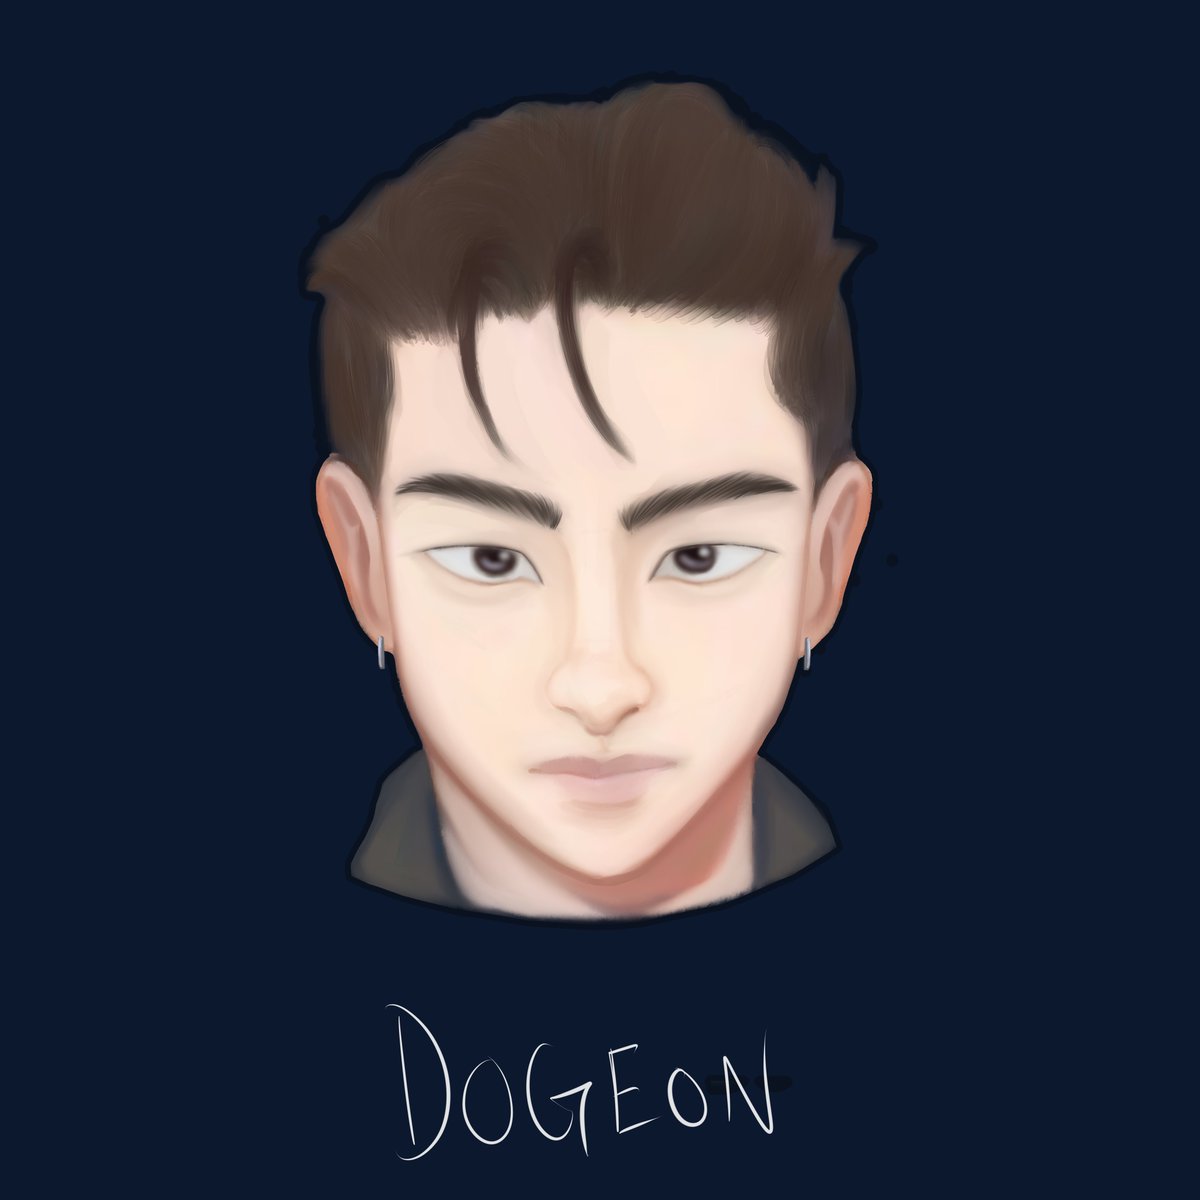 Dogeon #DOGEON_RM #7FATES_CHAKHO